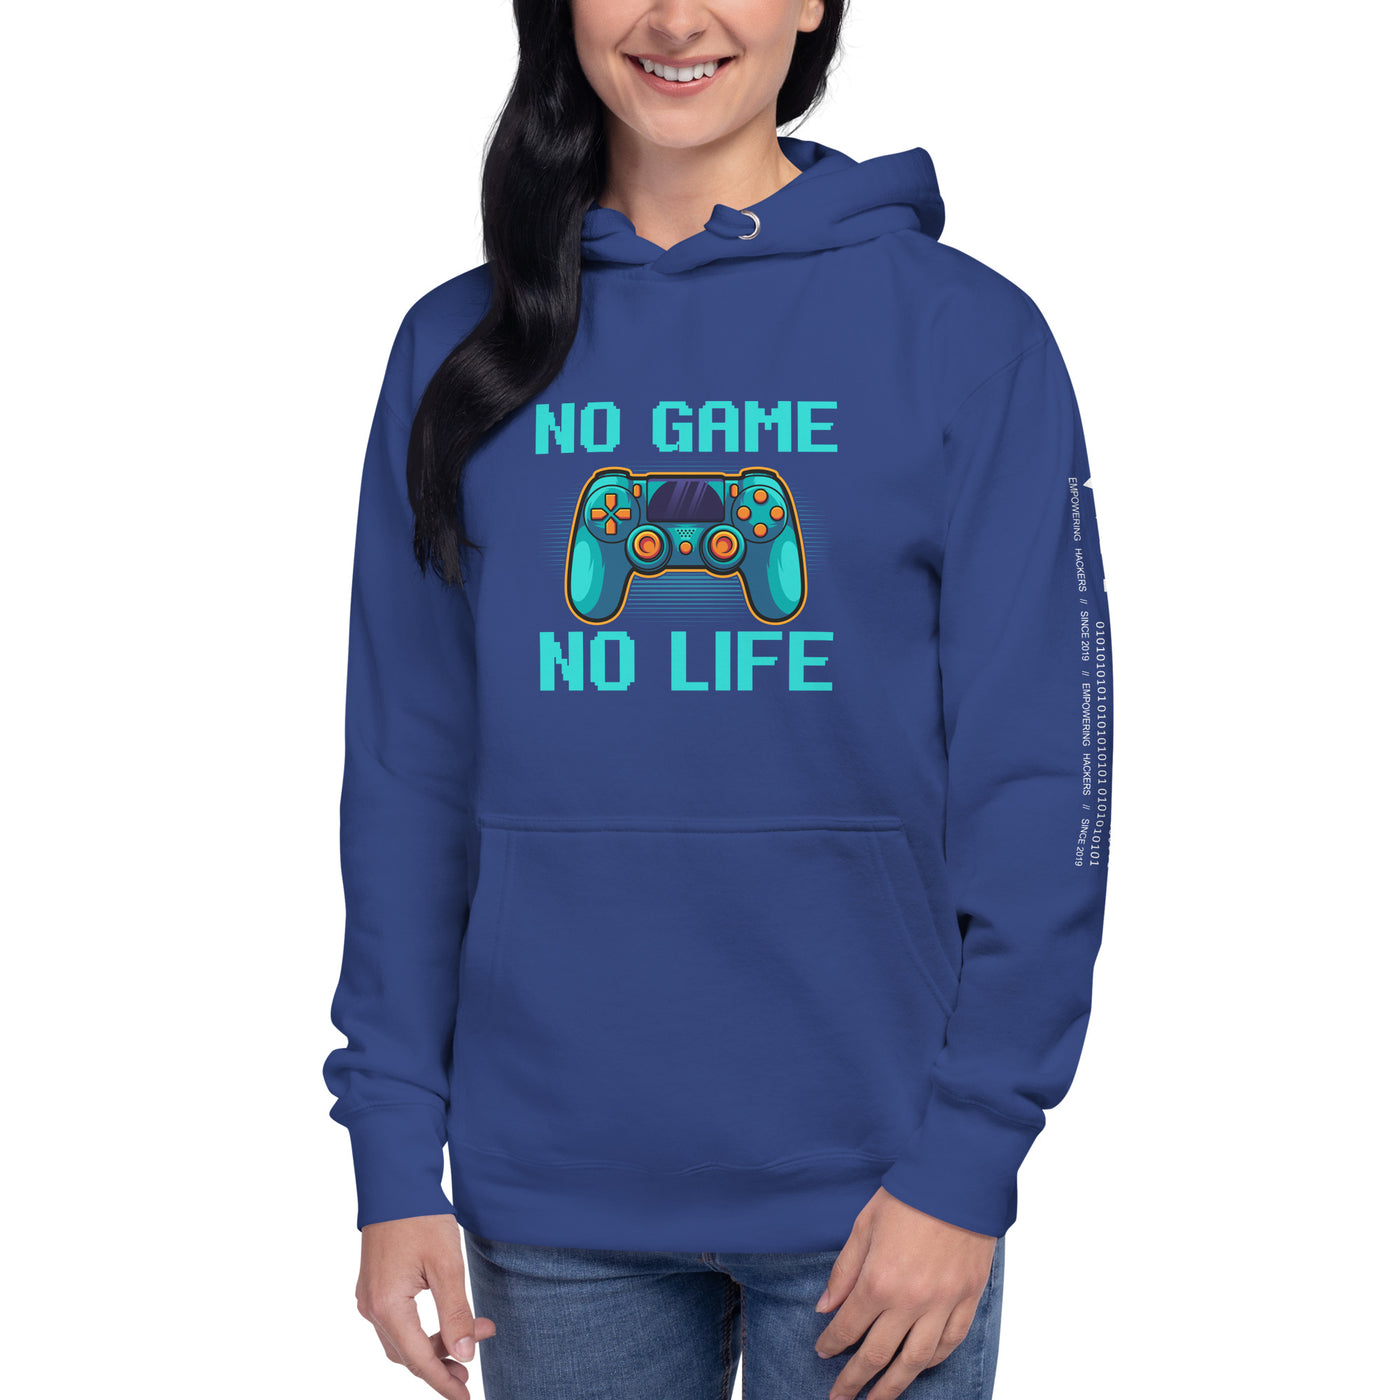 No Game; No Life - Unisex Hoodie